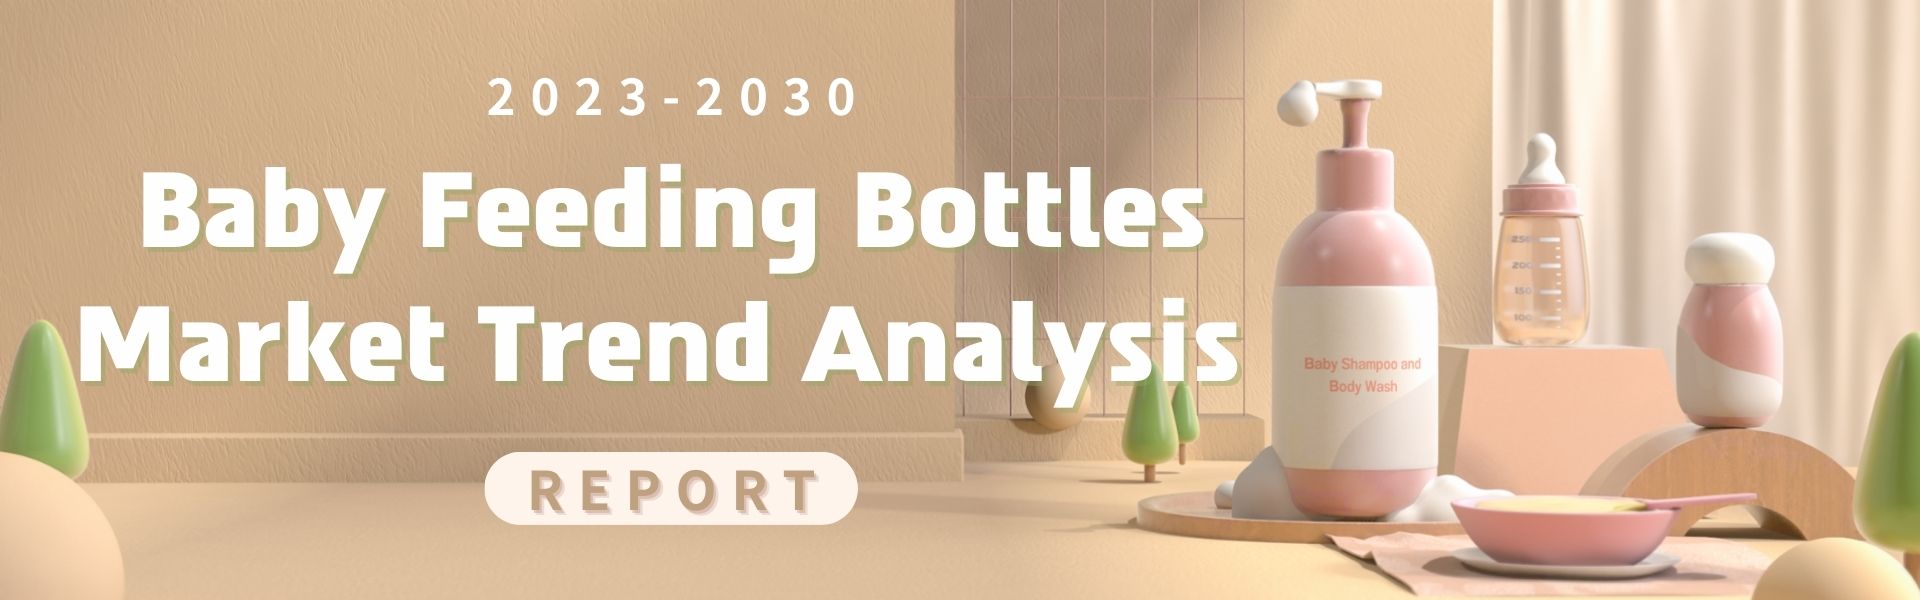 2023-2030 Baby Feeding Bottles Market Trend Analysis Report